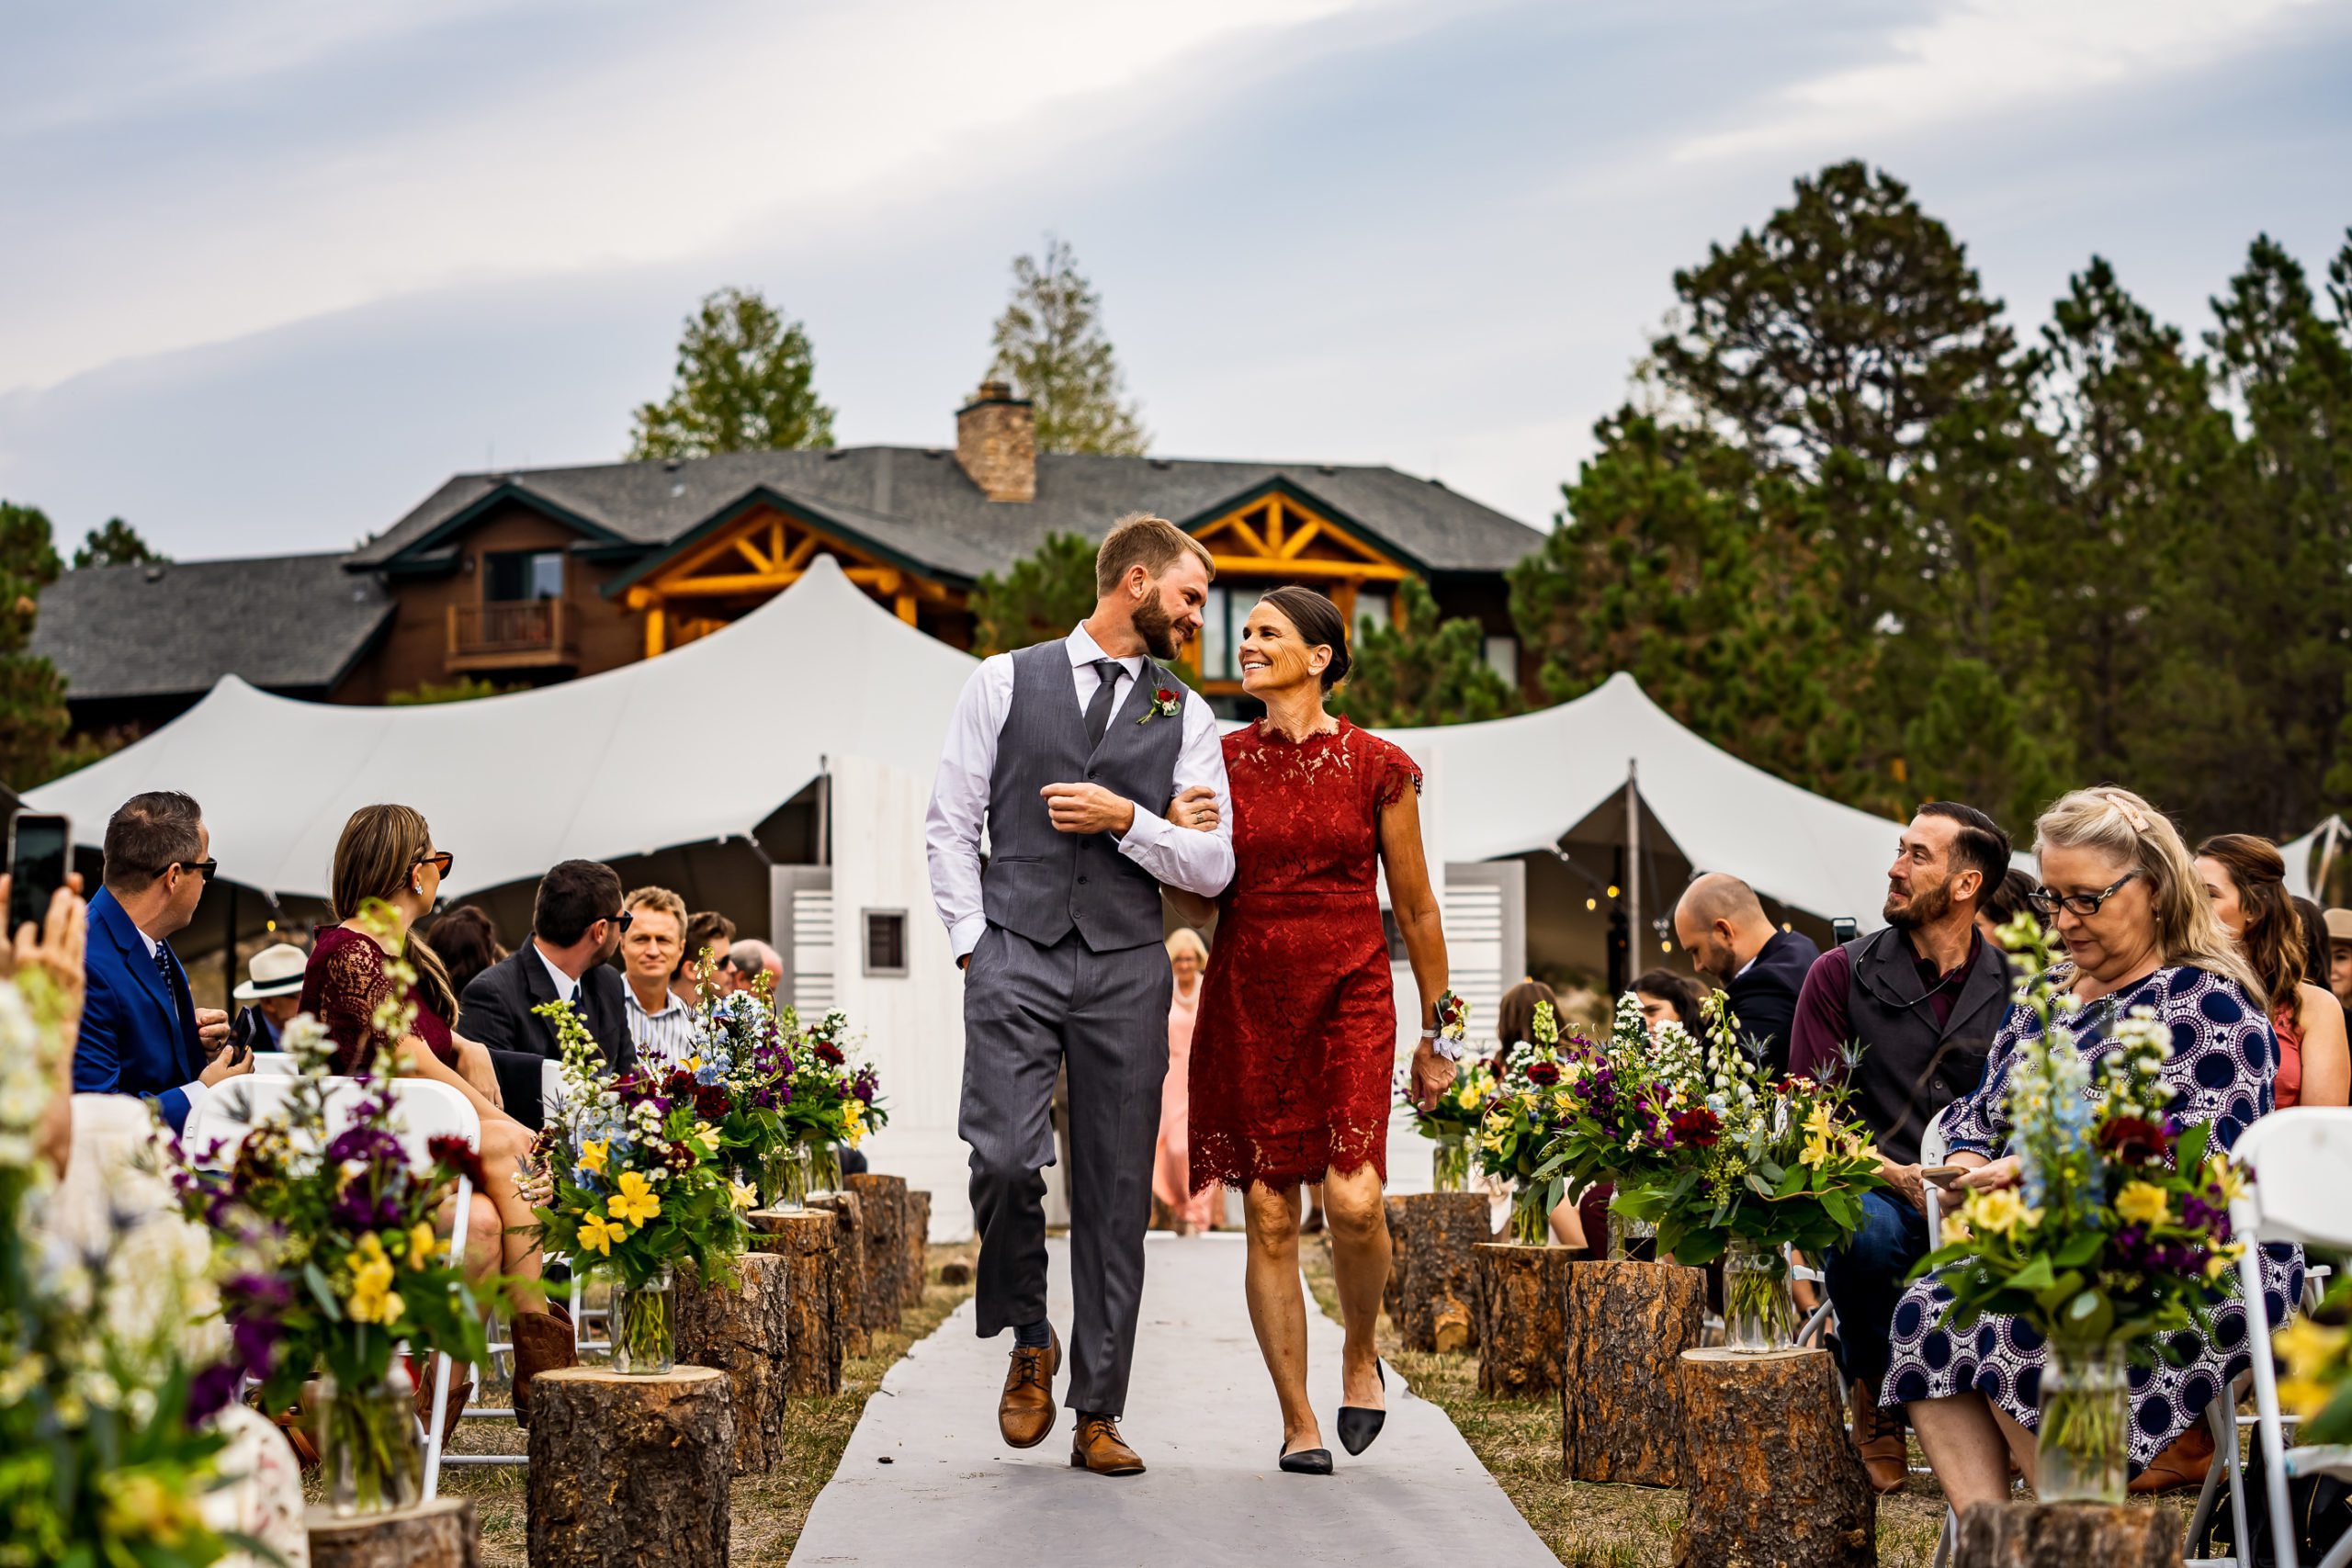 A bridesmaid and groomsman walk down the isle at a backyard wedding in Colorado.